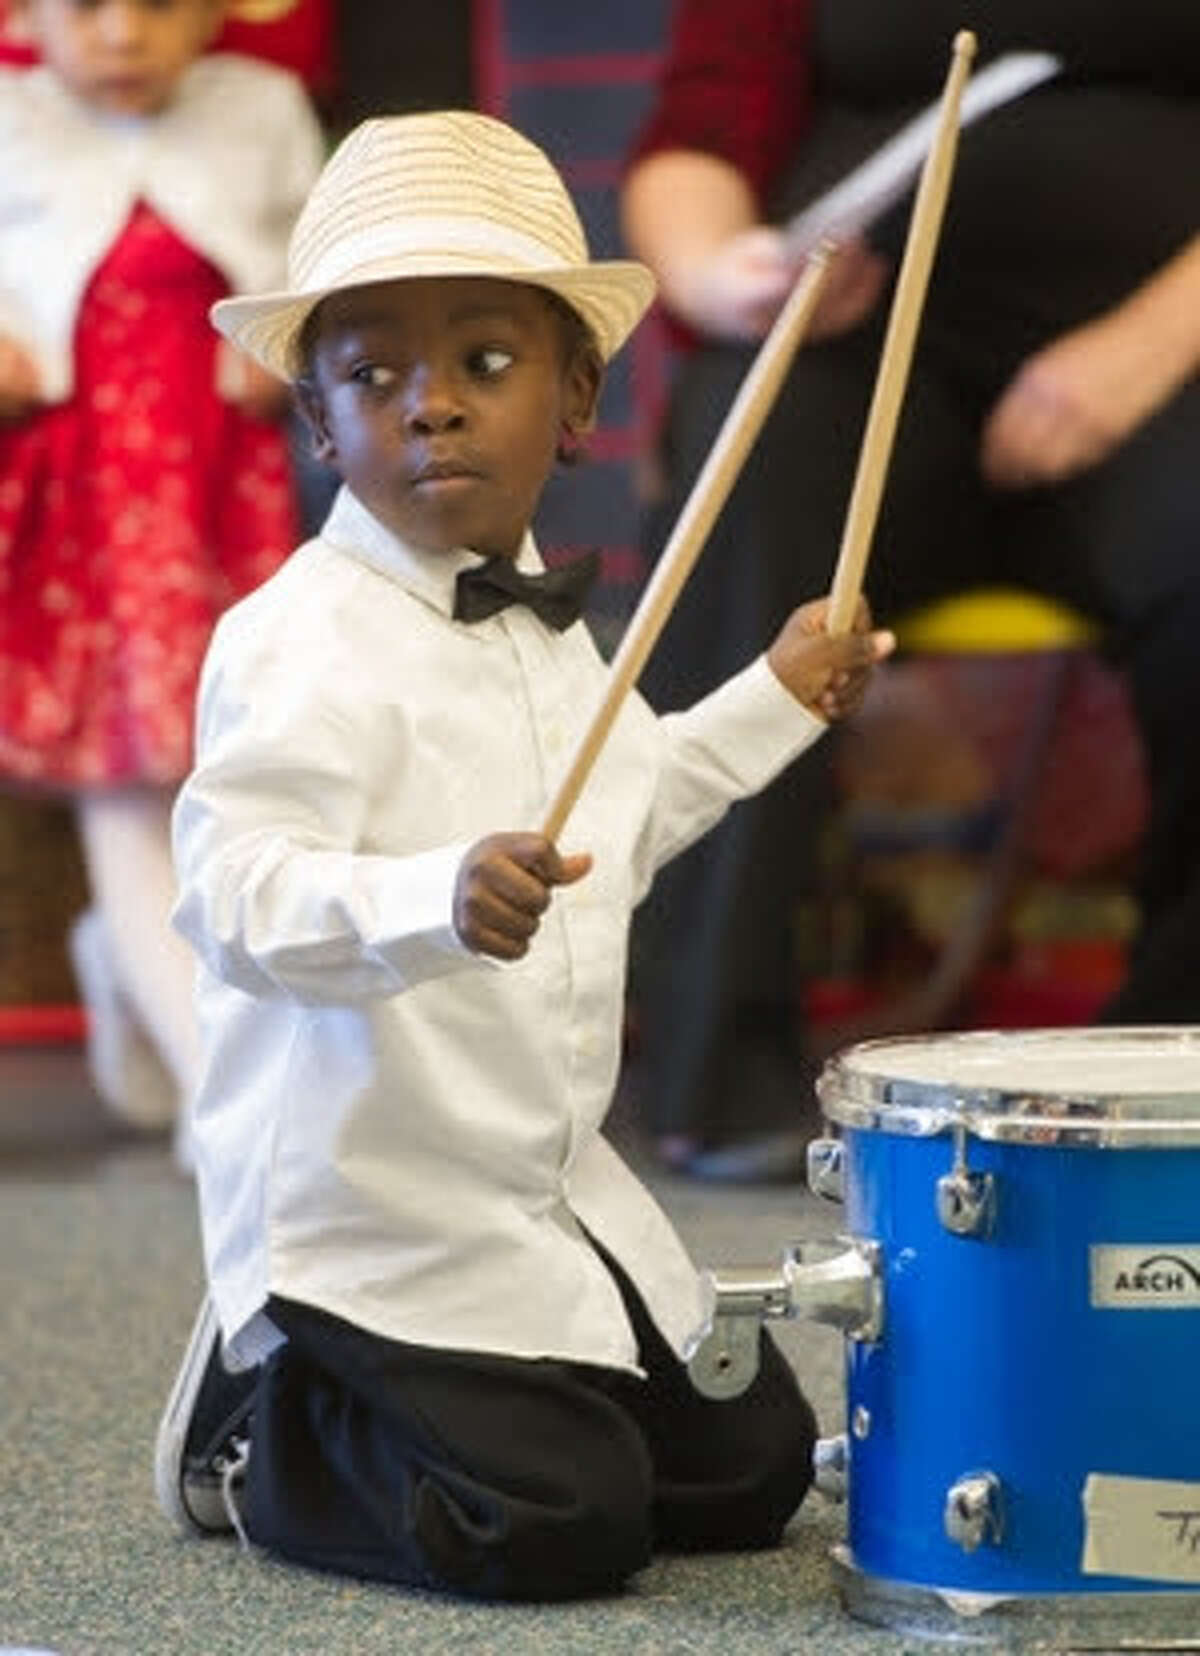 Braylen Sanders, 4, shows off his skills in “Little Drummer Boy.”